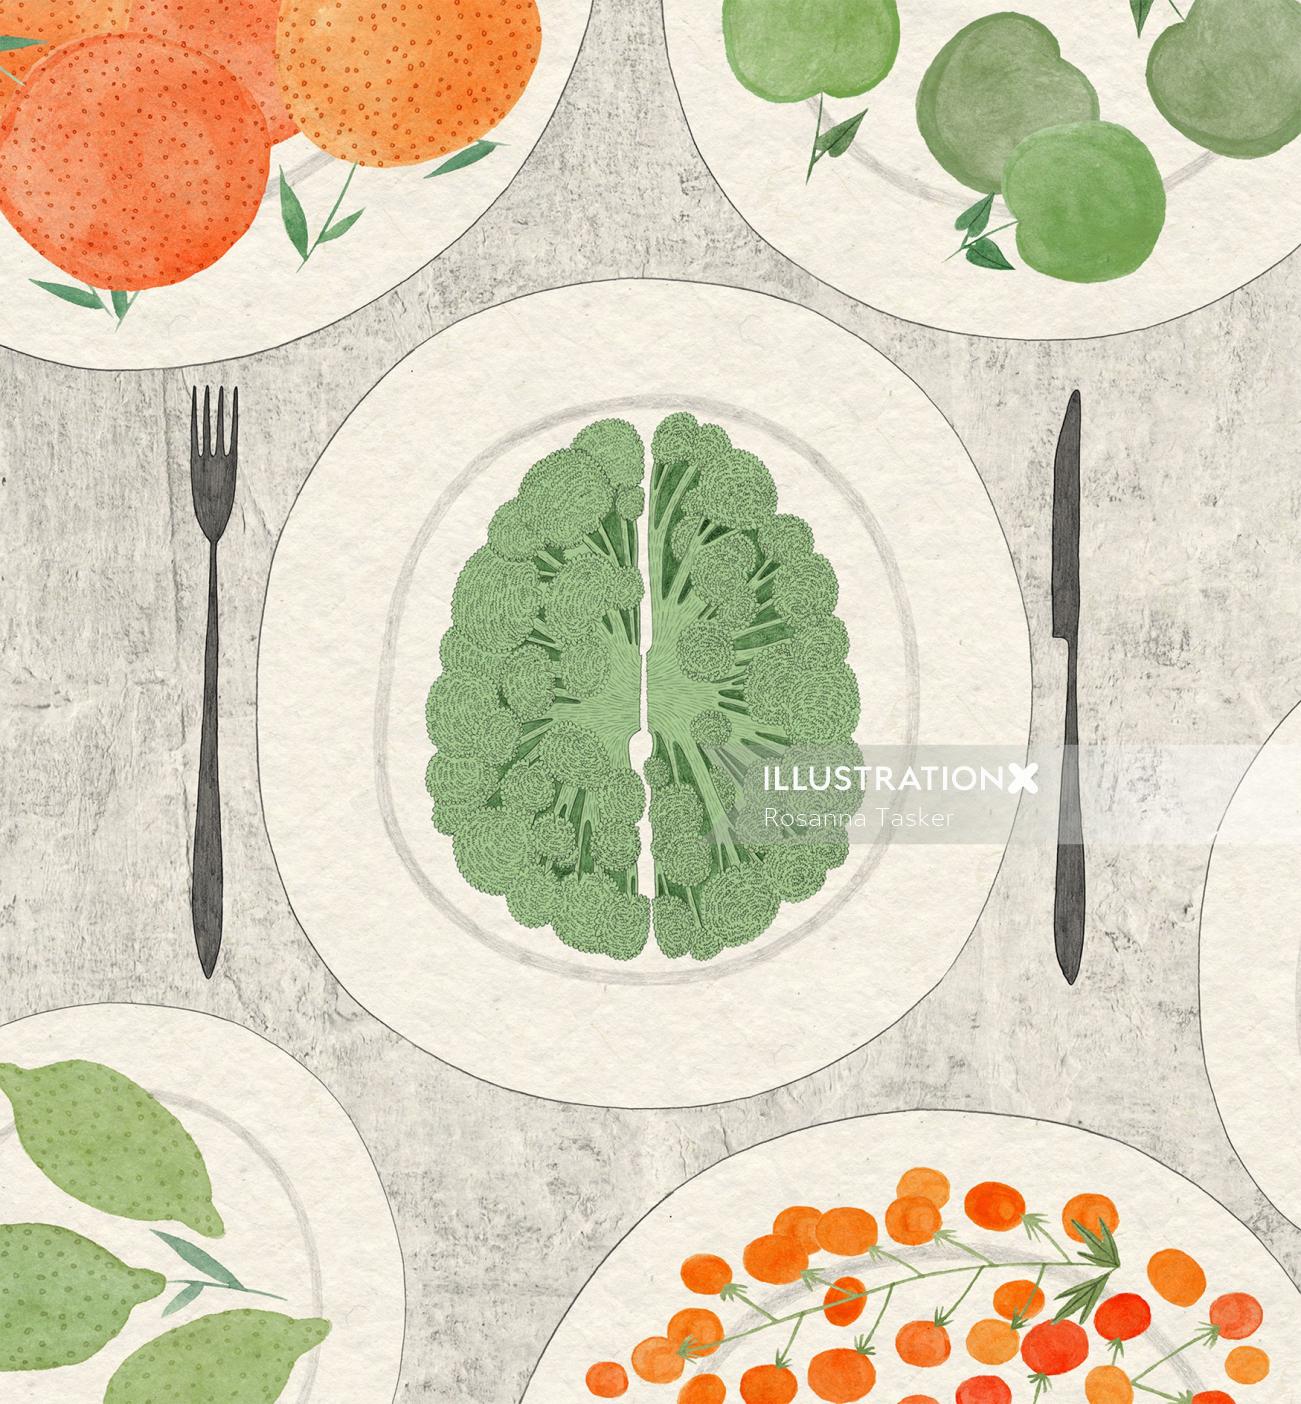 Food and Mental Health editorial illustration